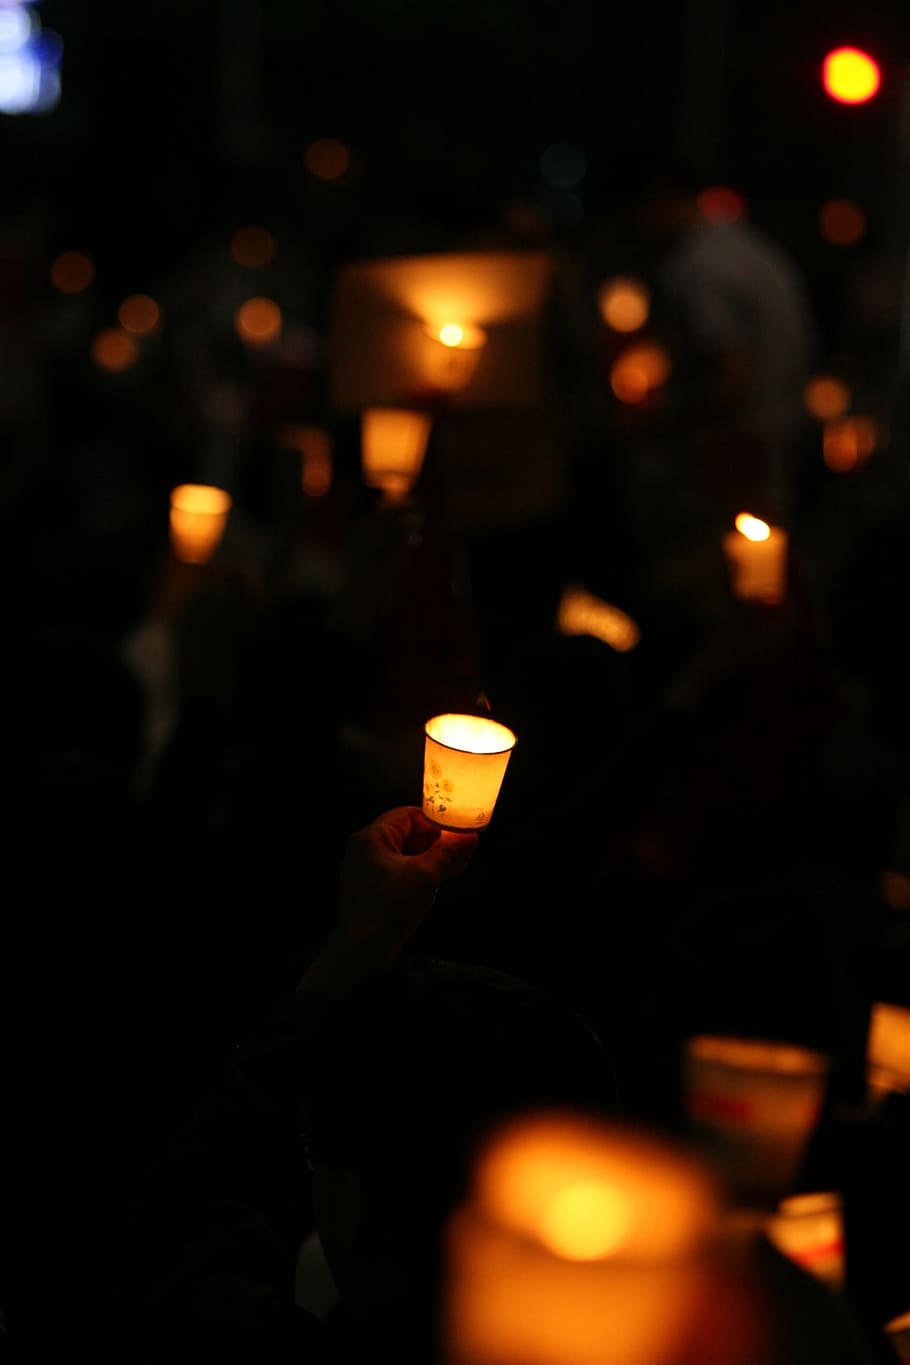 Candlelight, Korea, Cheonggye, Square, cheonggye square, grief, candle, light, memory, illuminated